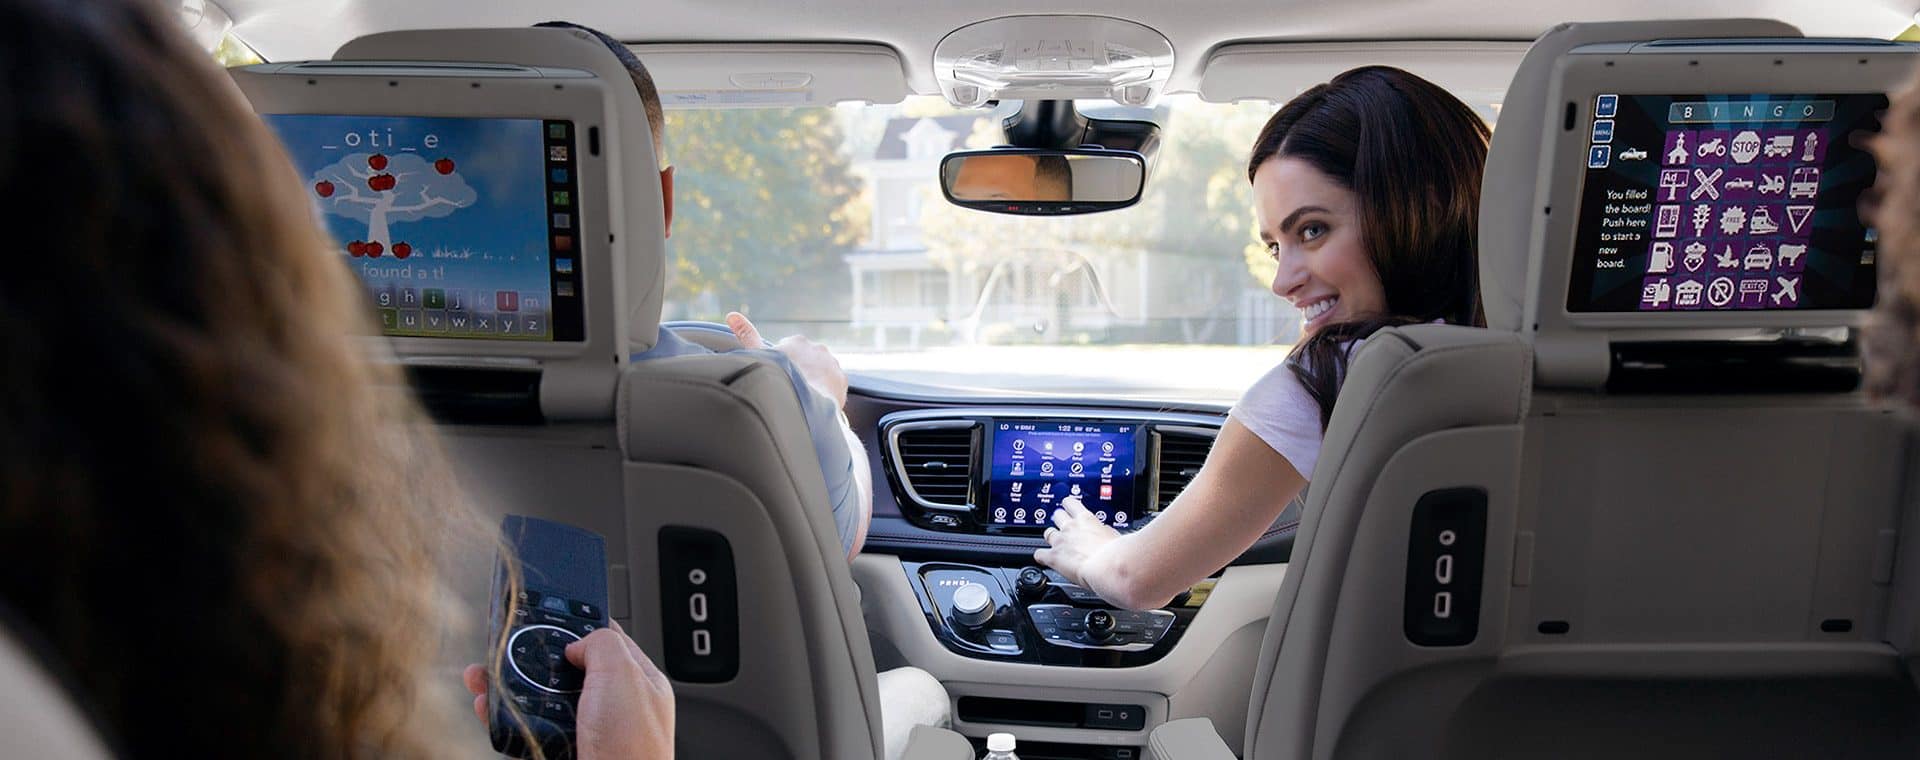 Chrysler Uconnect System - Hands-Free Navigation, Communication and more